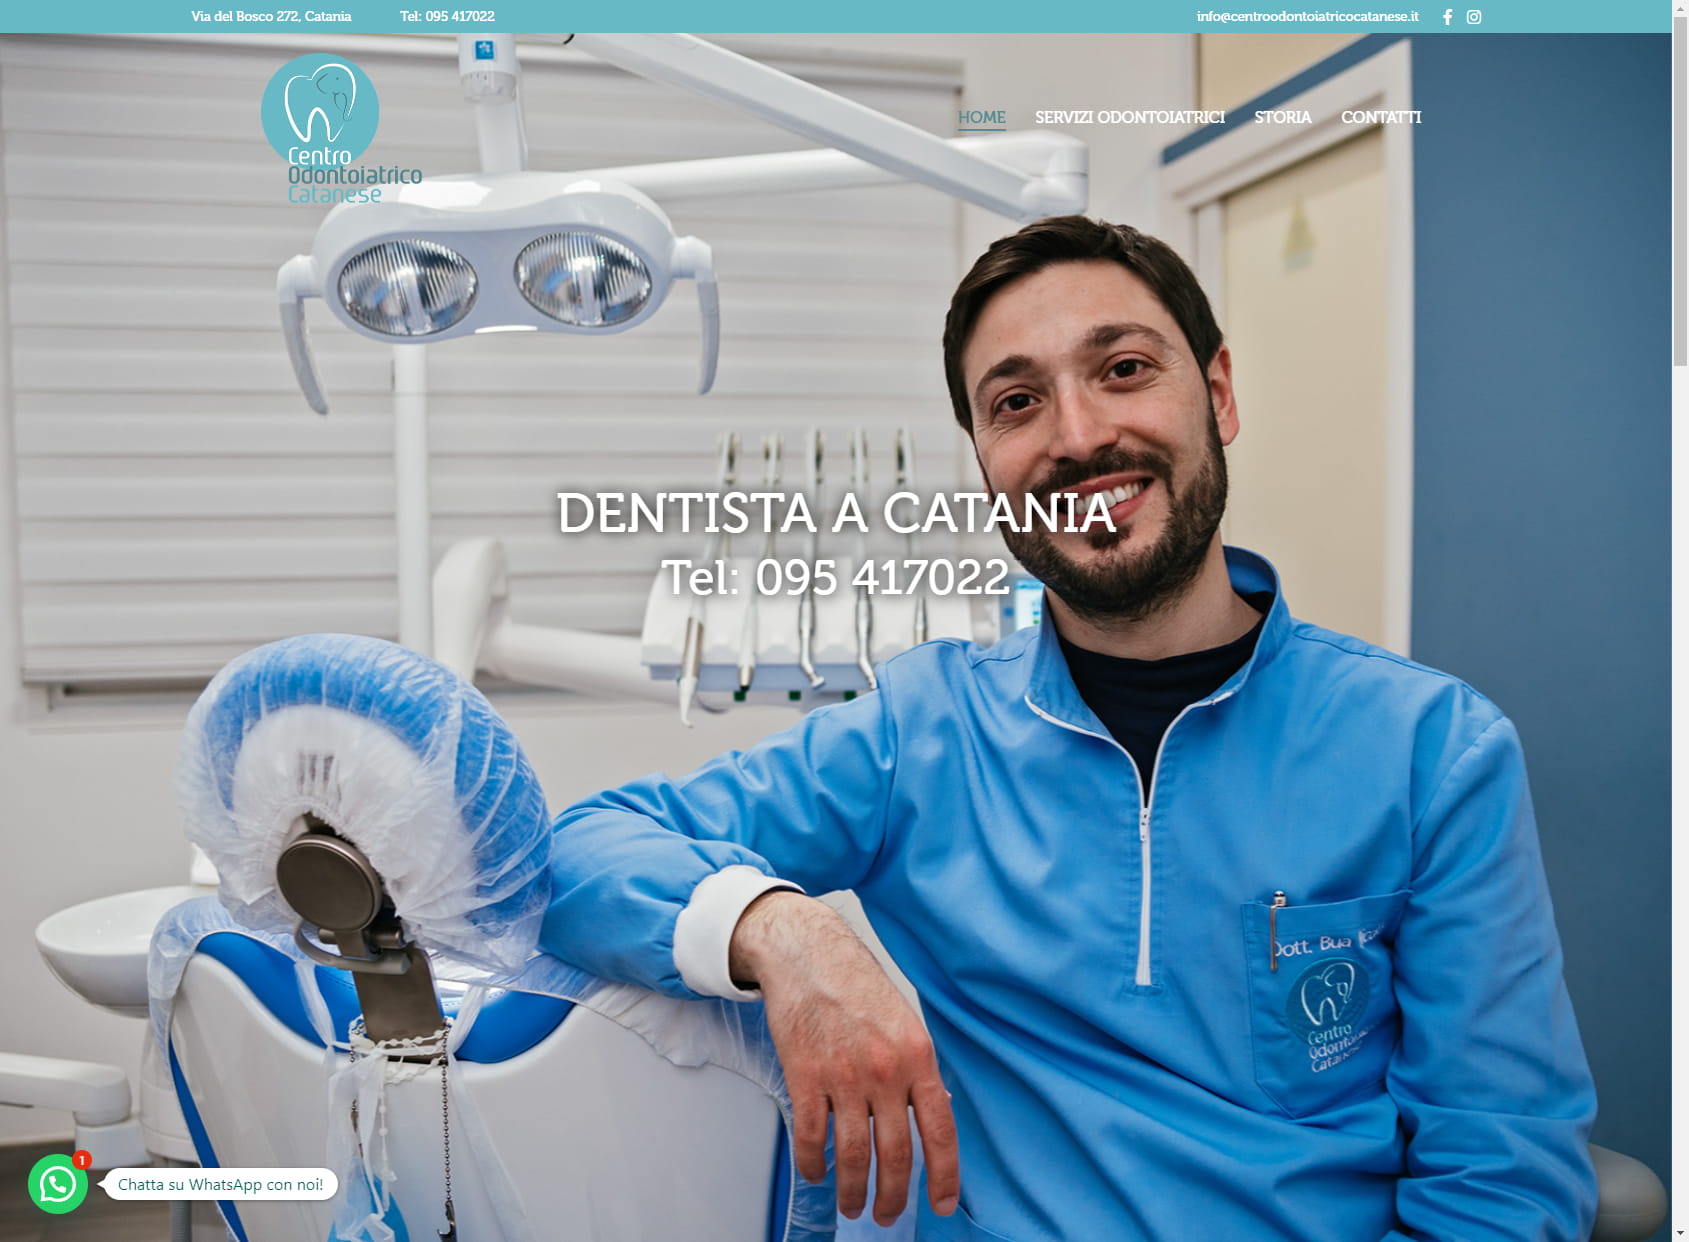 Centro Odontoiatrico Catanese - Dentista a Catania